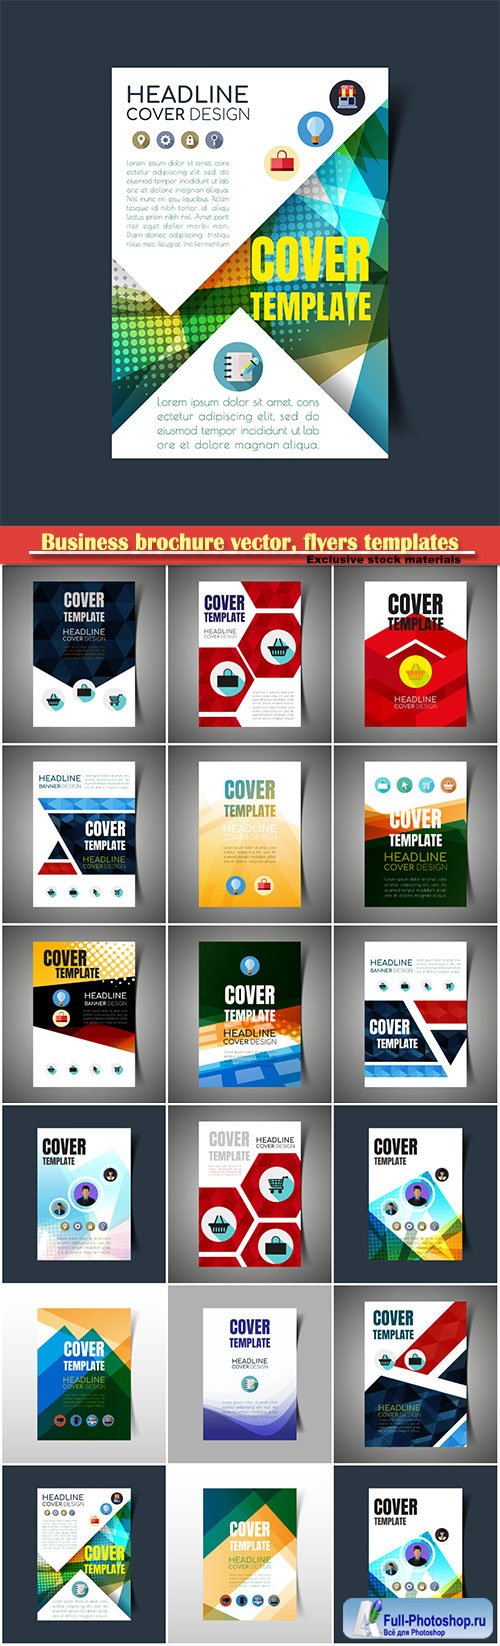 Business brochure vector, flyers templates, report cover design # 81